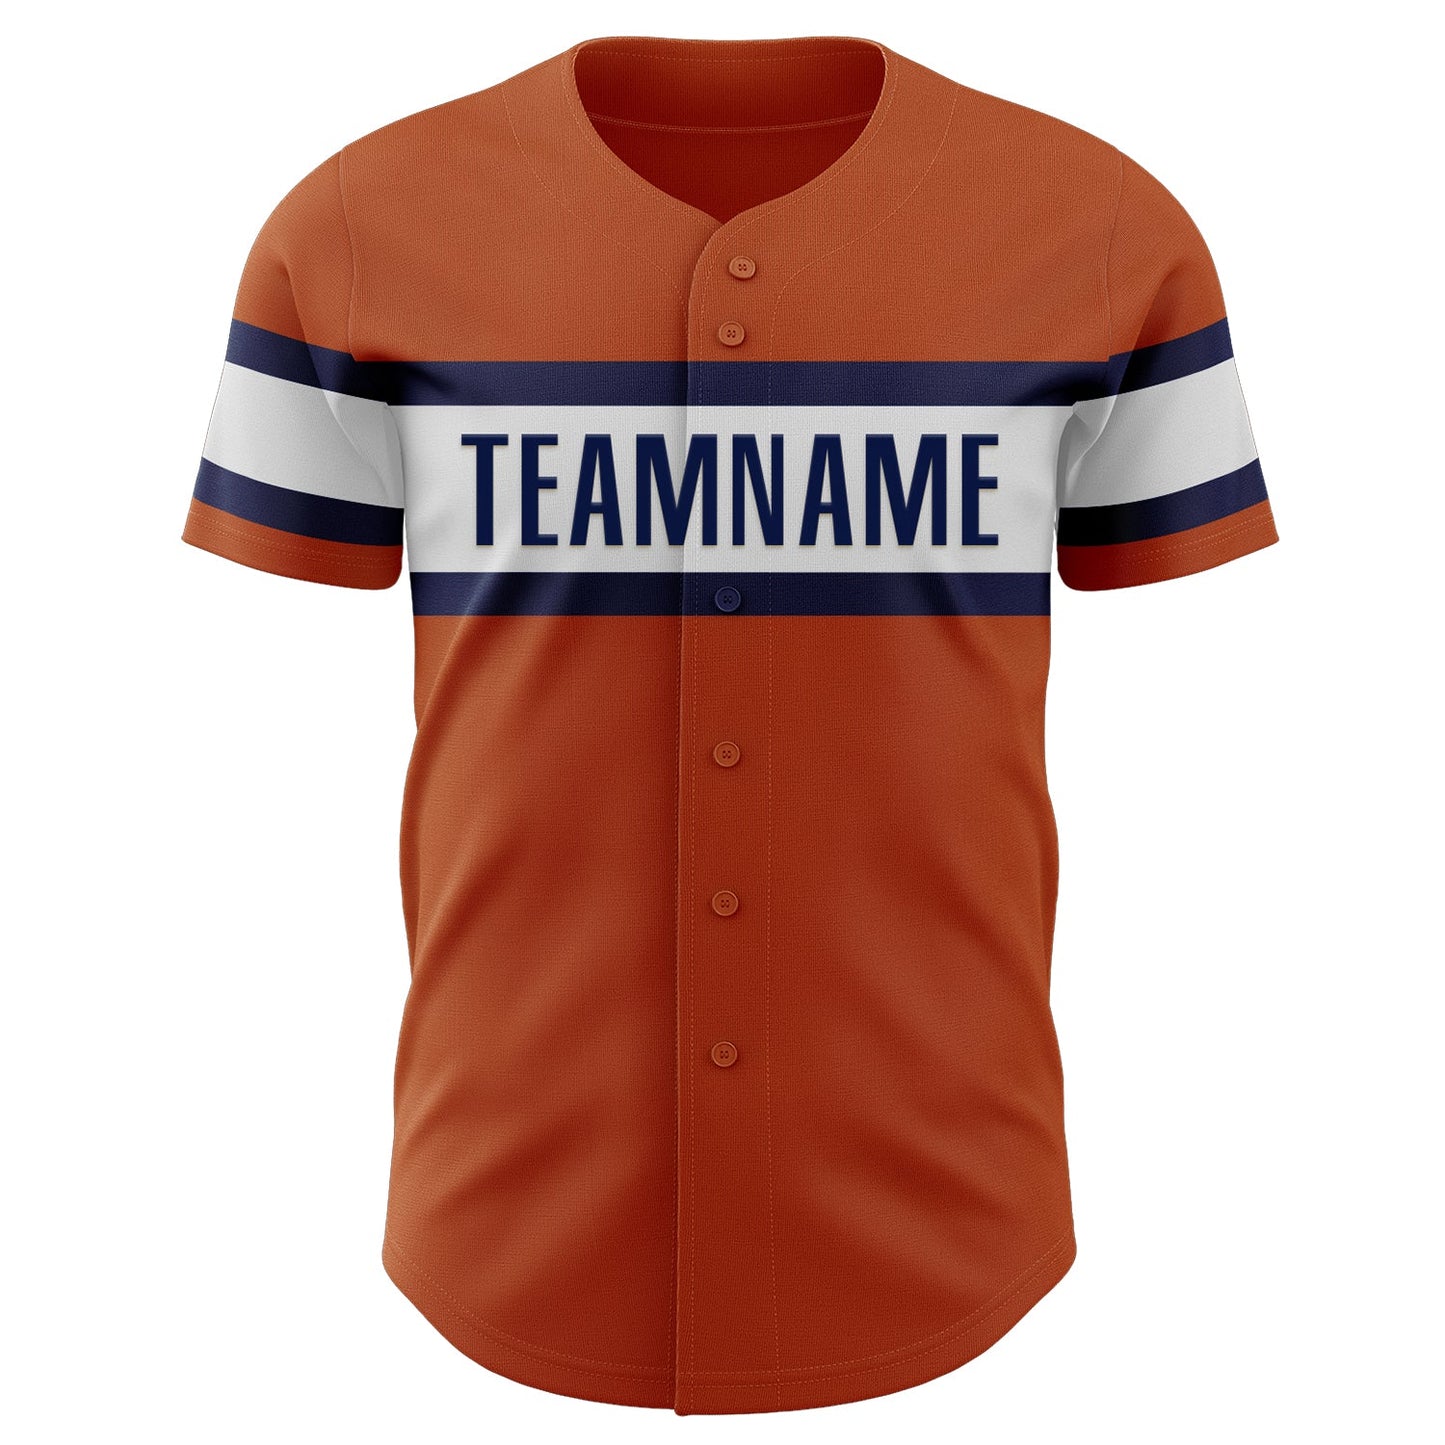 Custom Texas Orange White-Navy Authentic Baseball Jersey